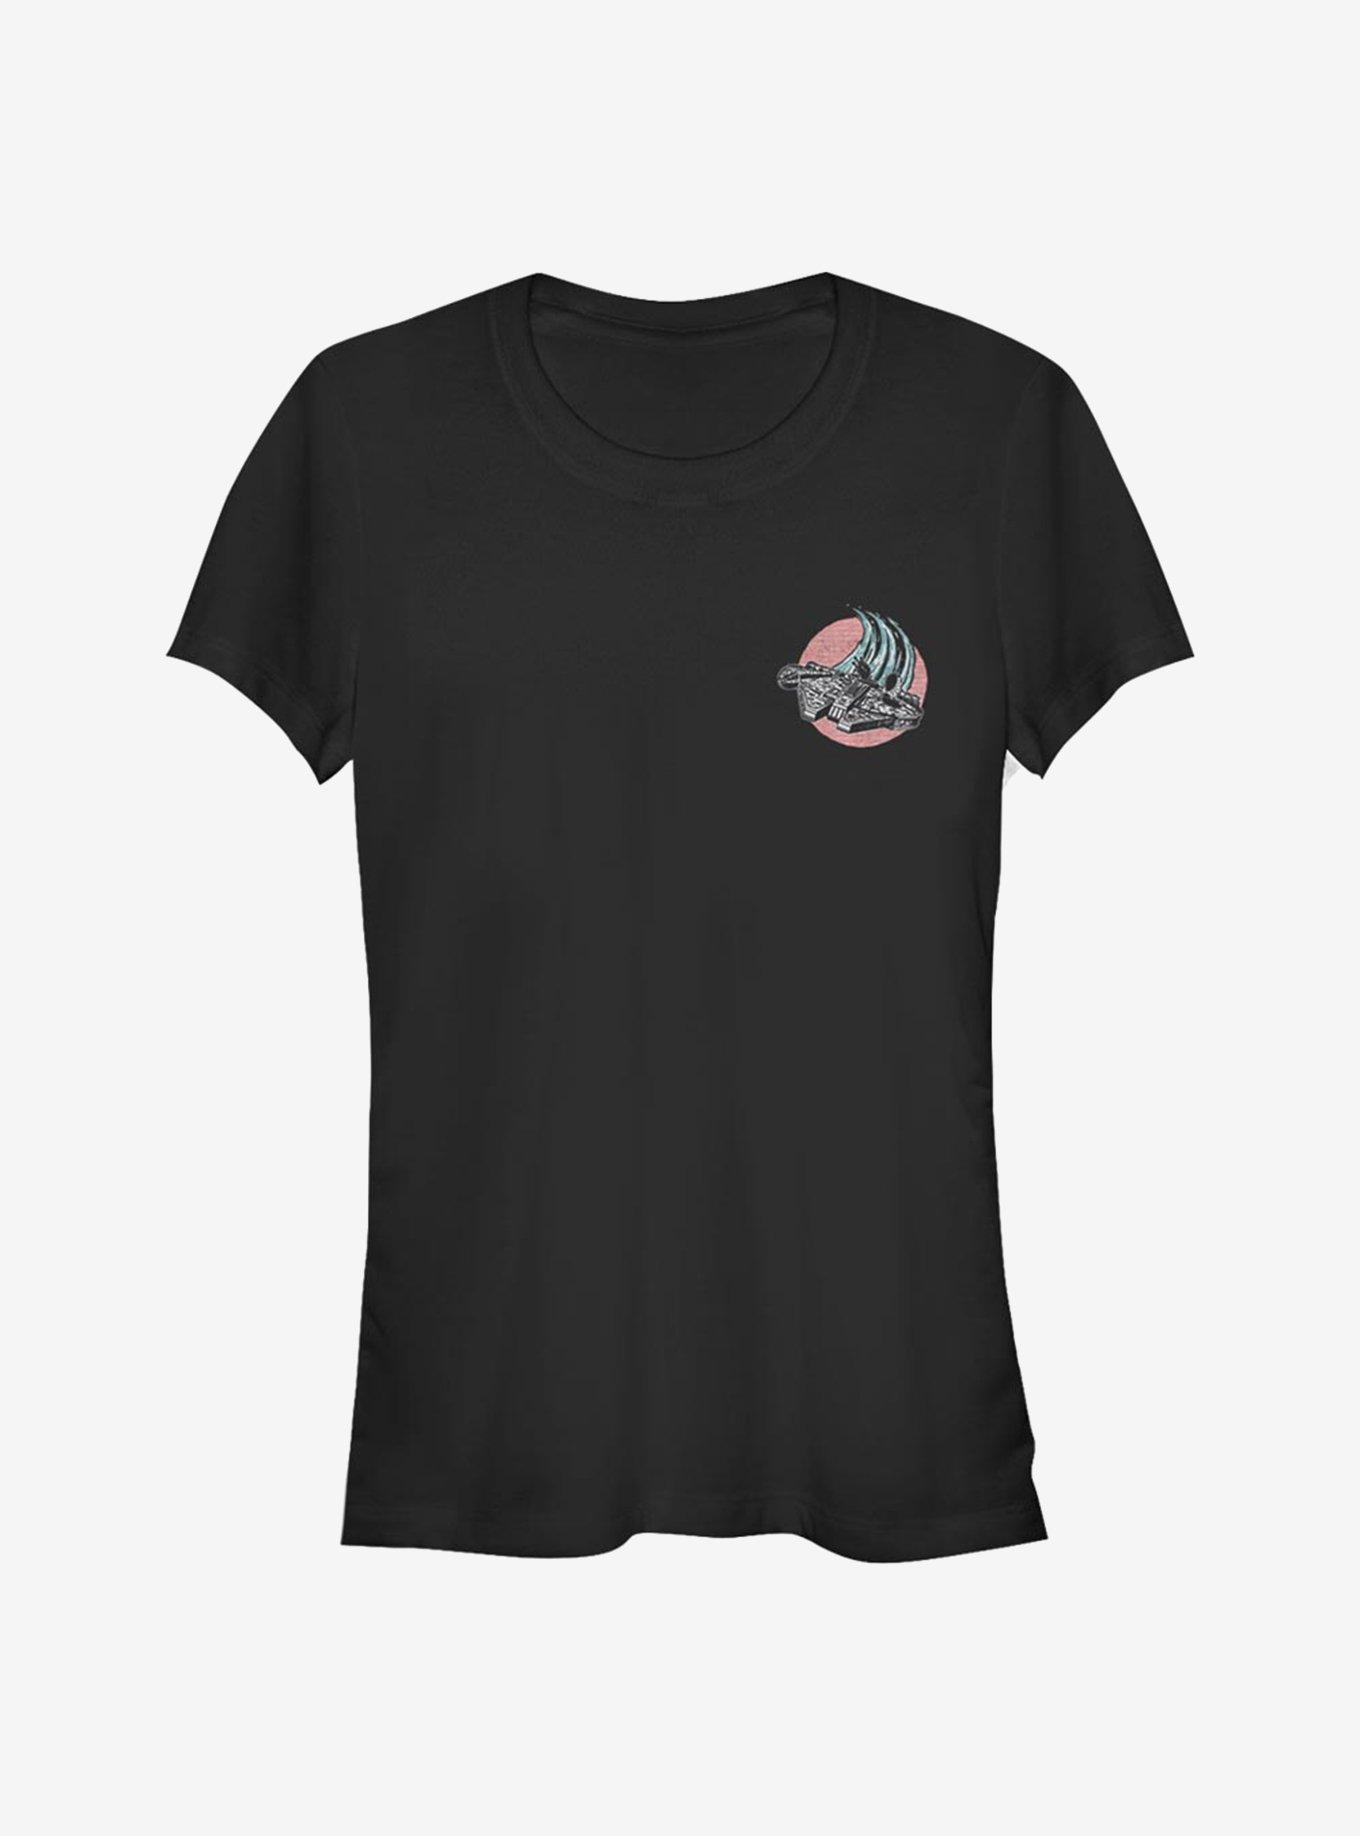 Star Wars Falcon Flyby Badge Girls T-Shirt